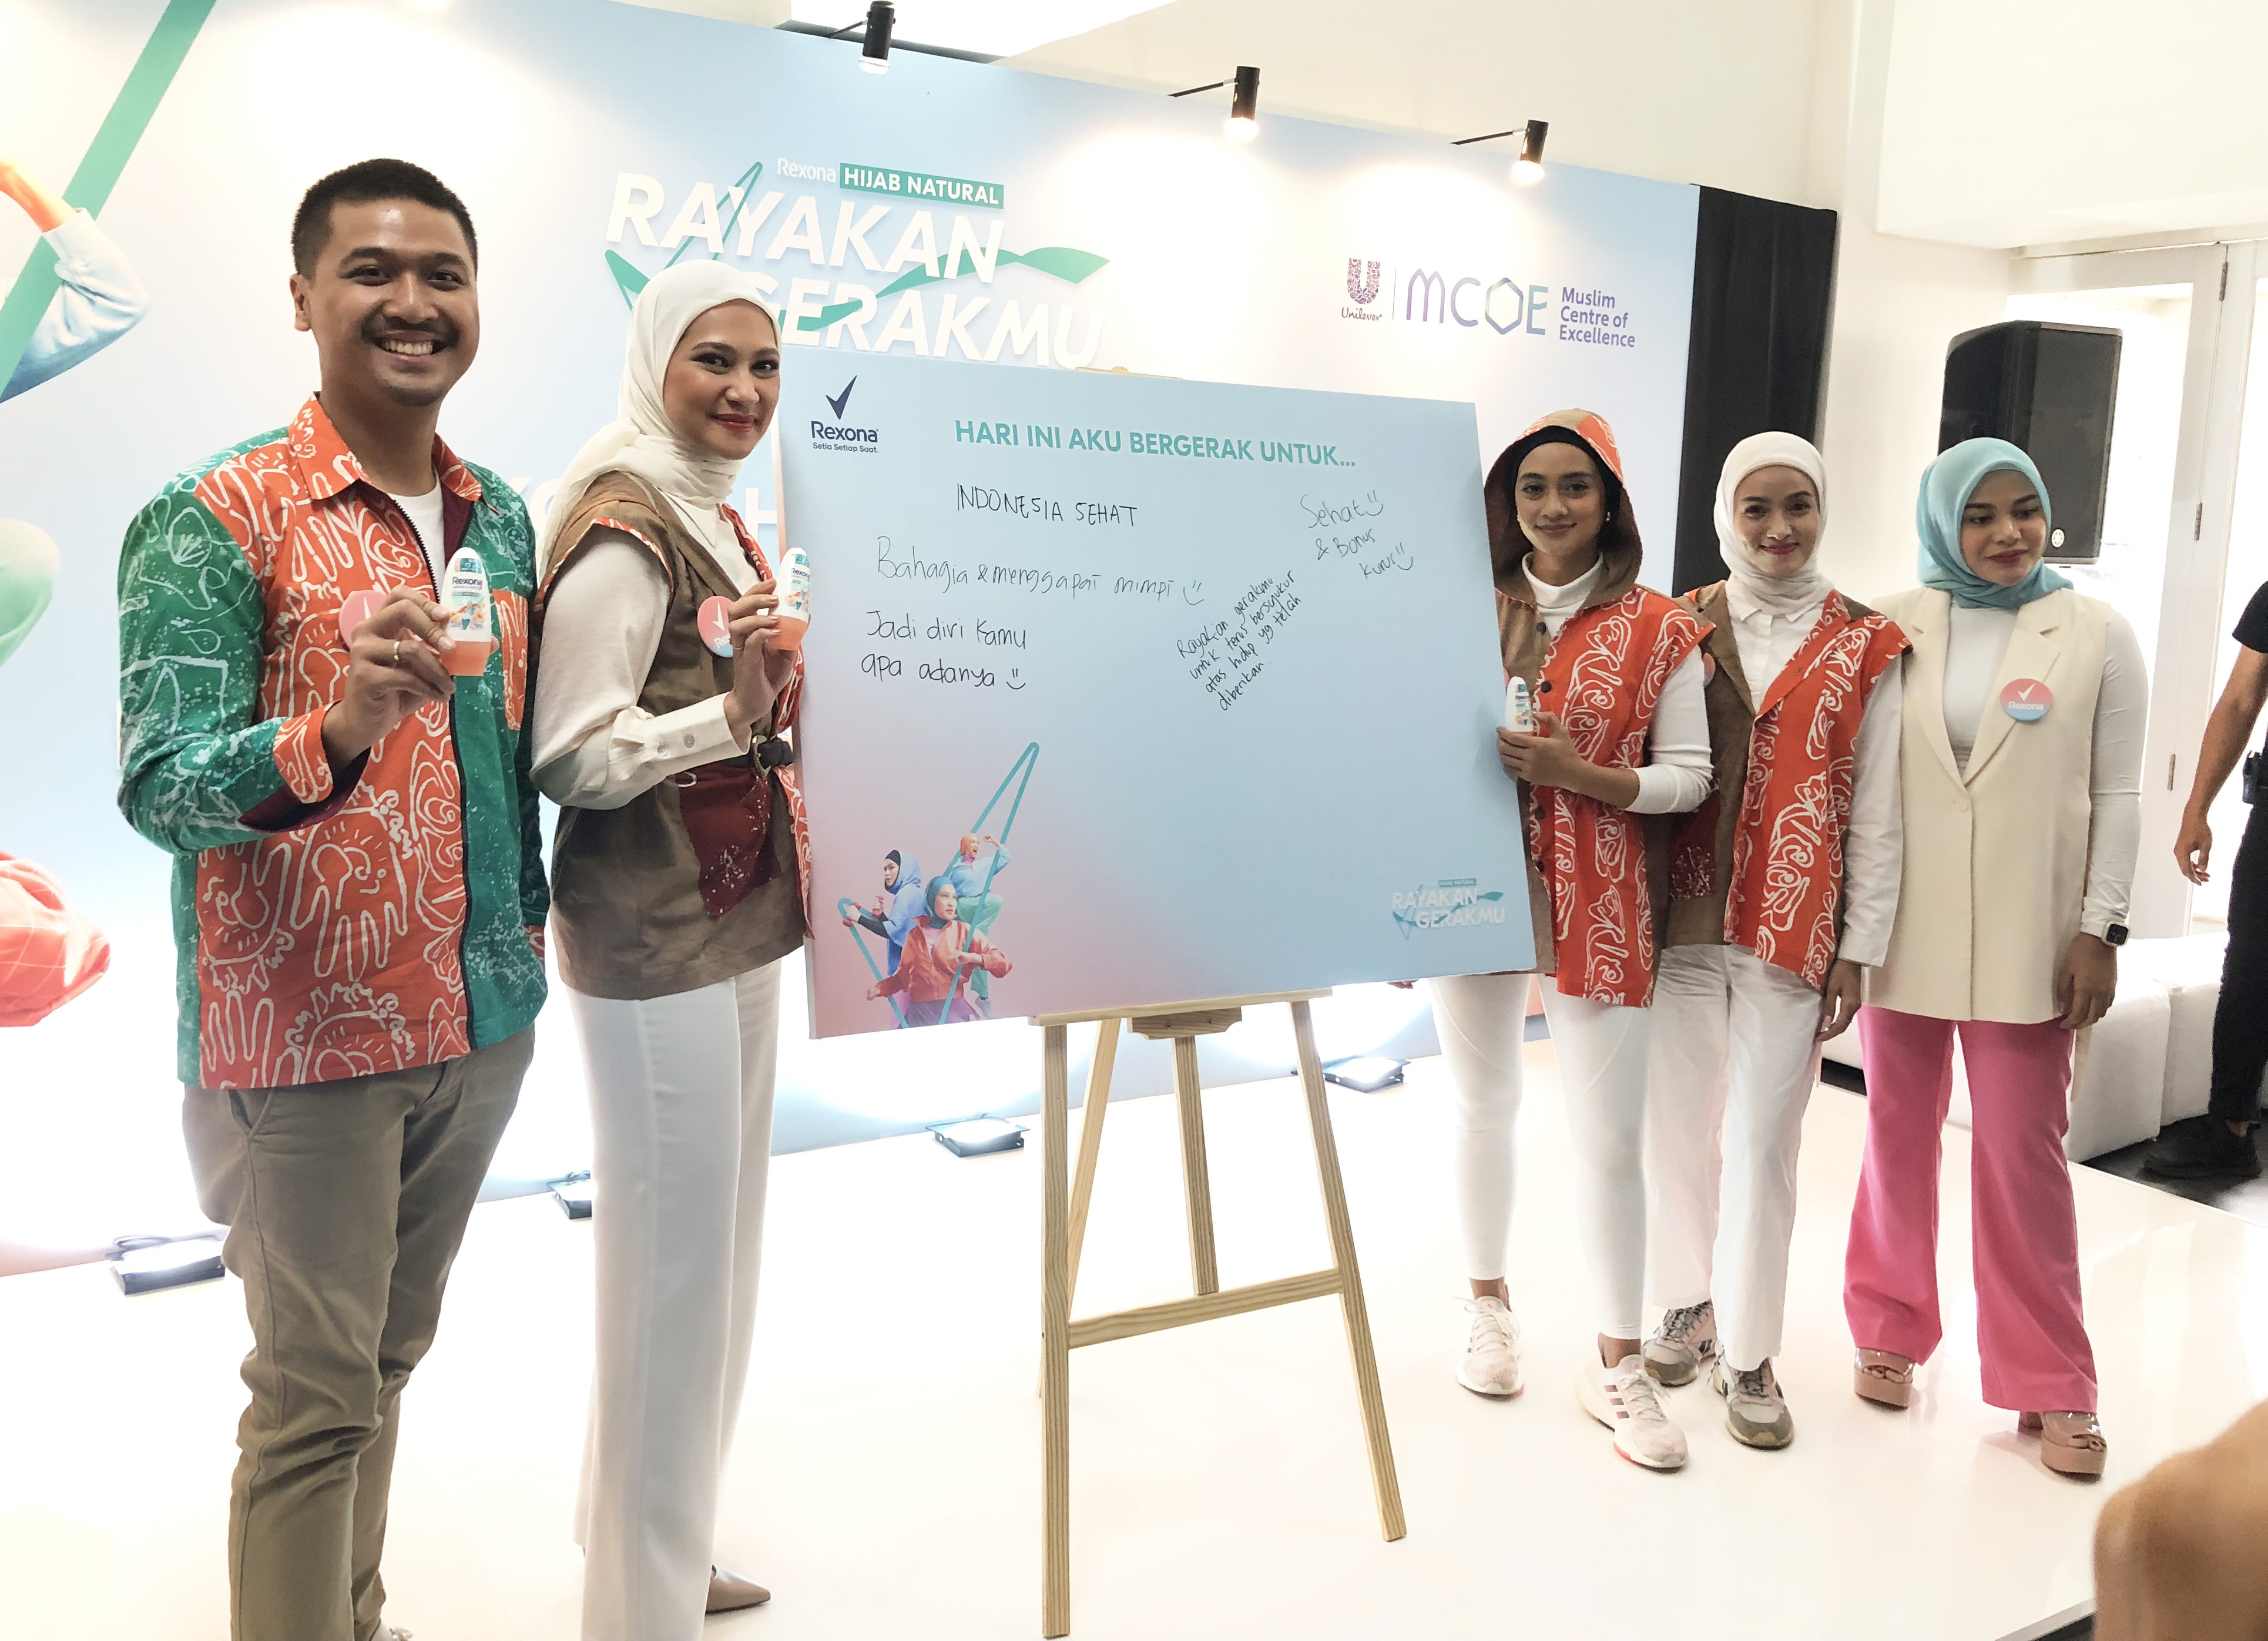 Rexona Hijab Natural Gelar “Rayakan Gerakmu Fest”, Ajak Hijabers Indonesia Bergerak